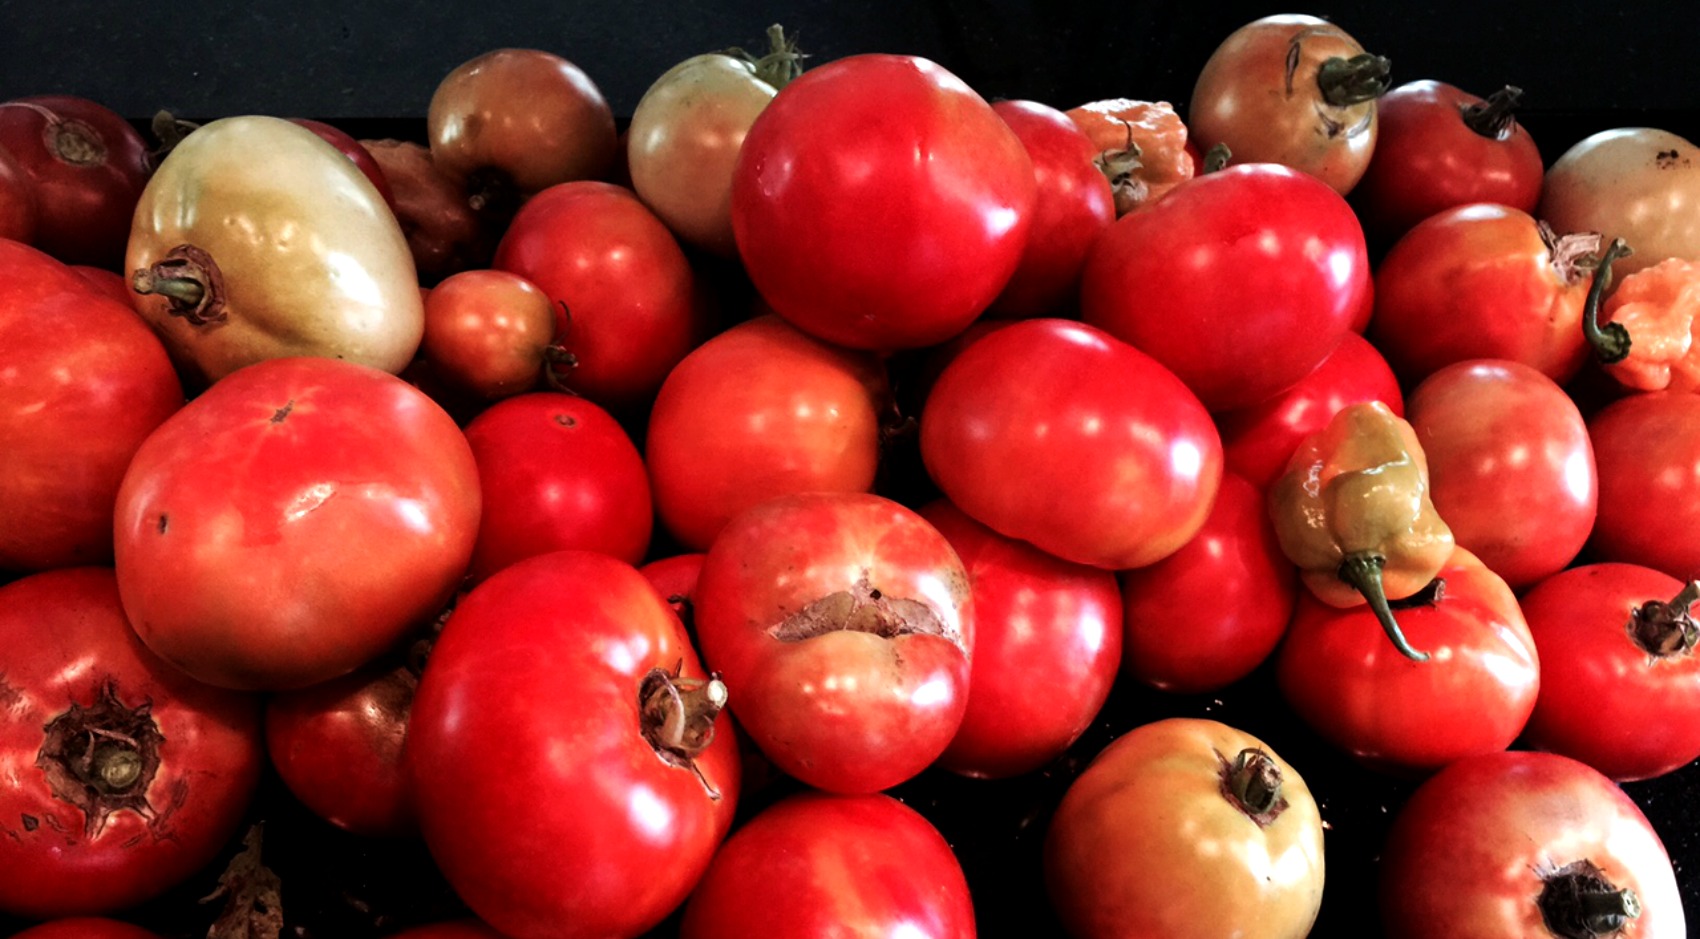 Johns Island tomatoes 